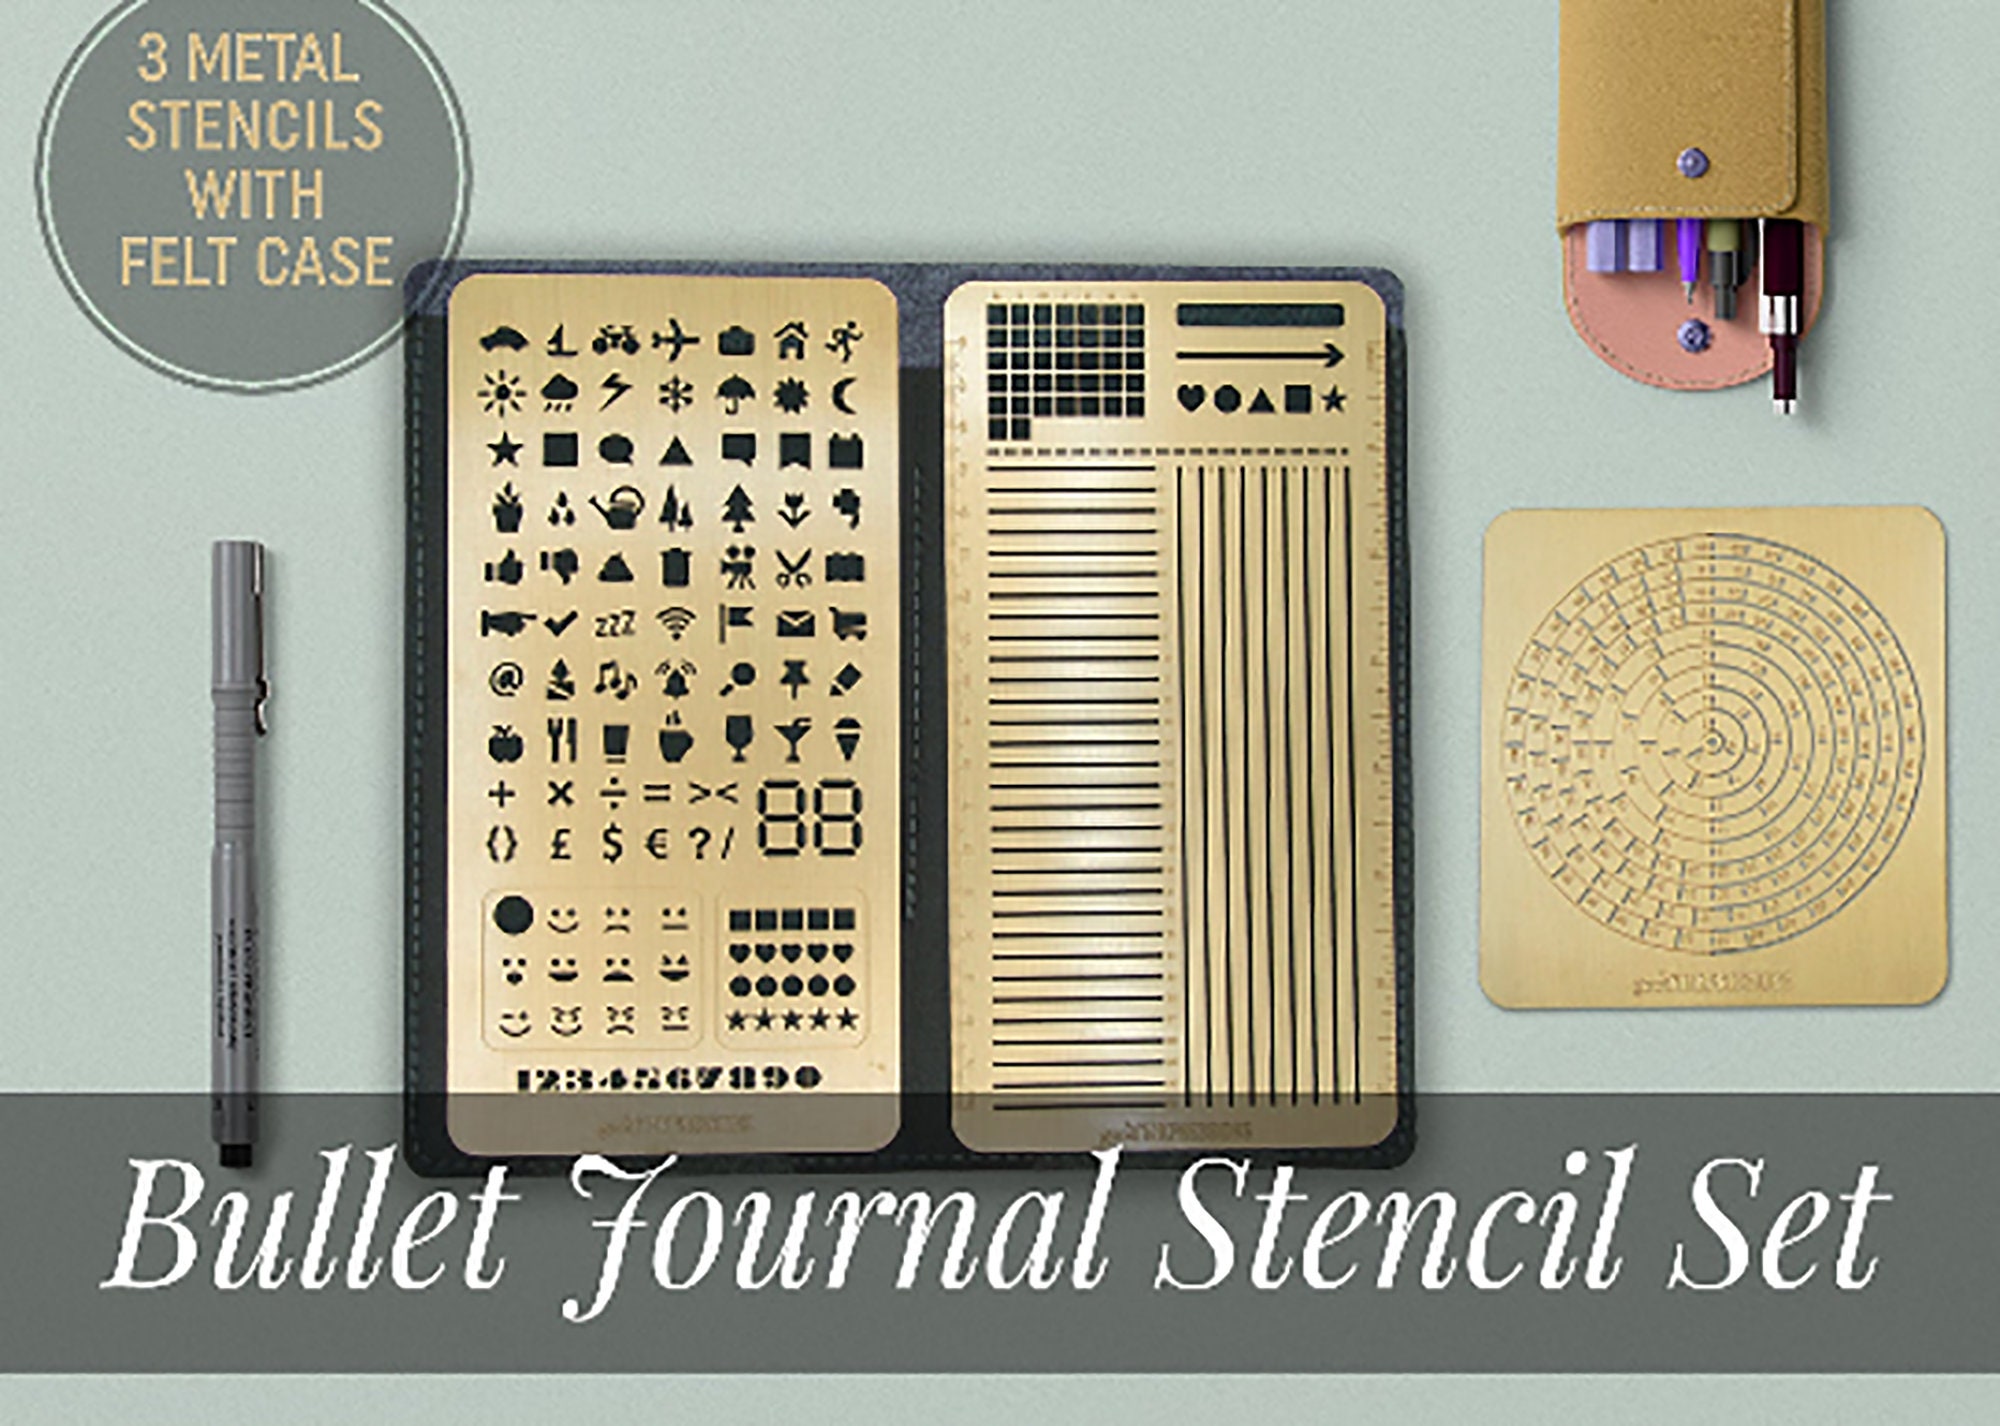 Stencil1 Journal Stencils 3-Pack S1_JOU_010203 - The Home Depot